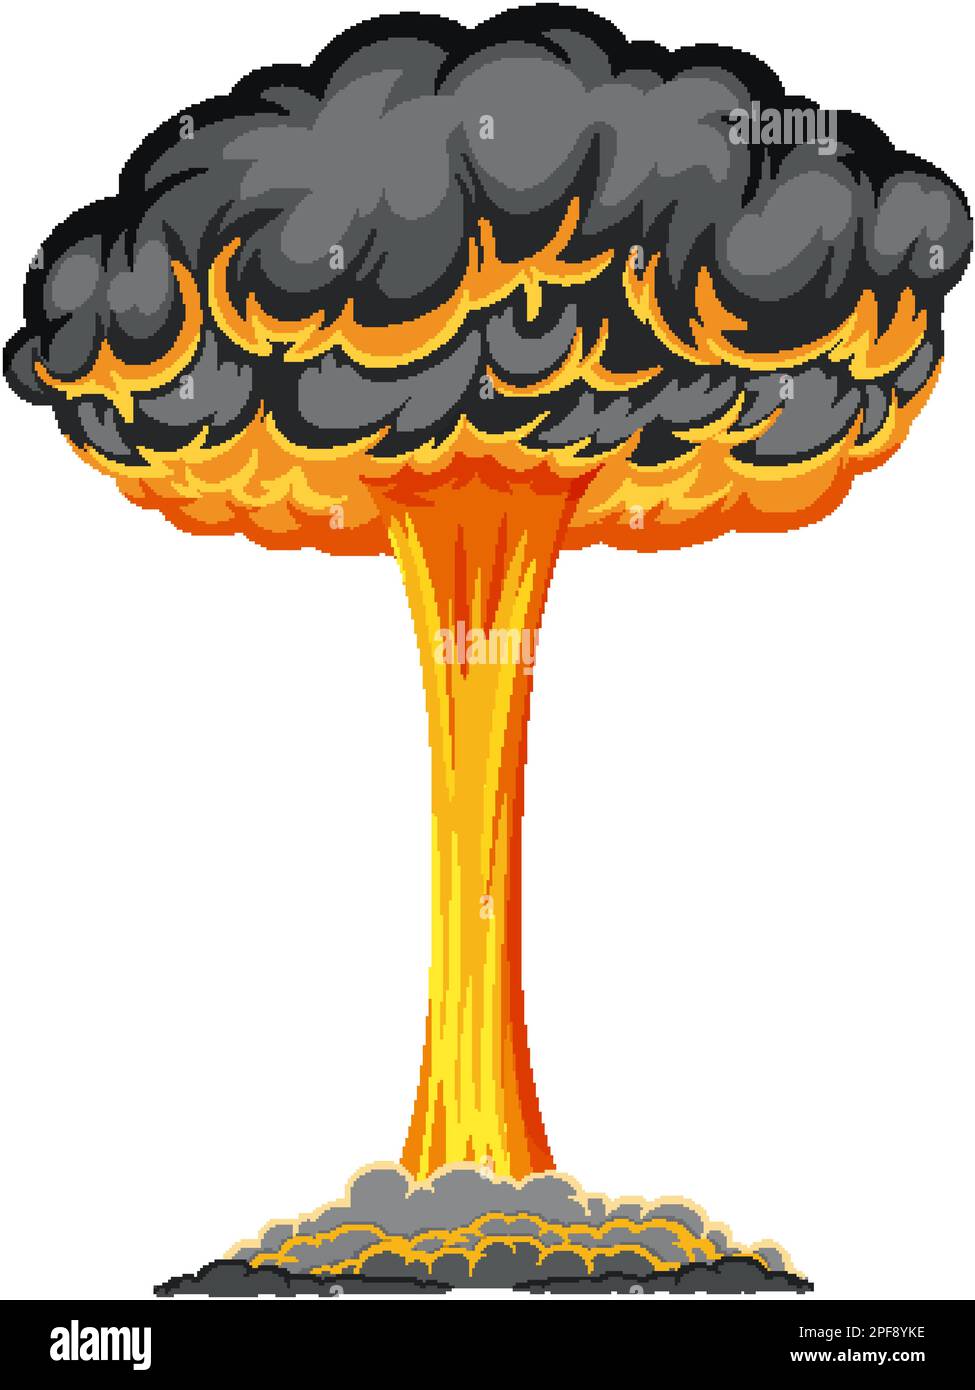 Atomic bomb mushroom cloud illustration Stock Vector Image & Art - Alamy